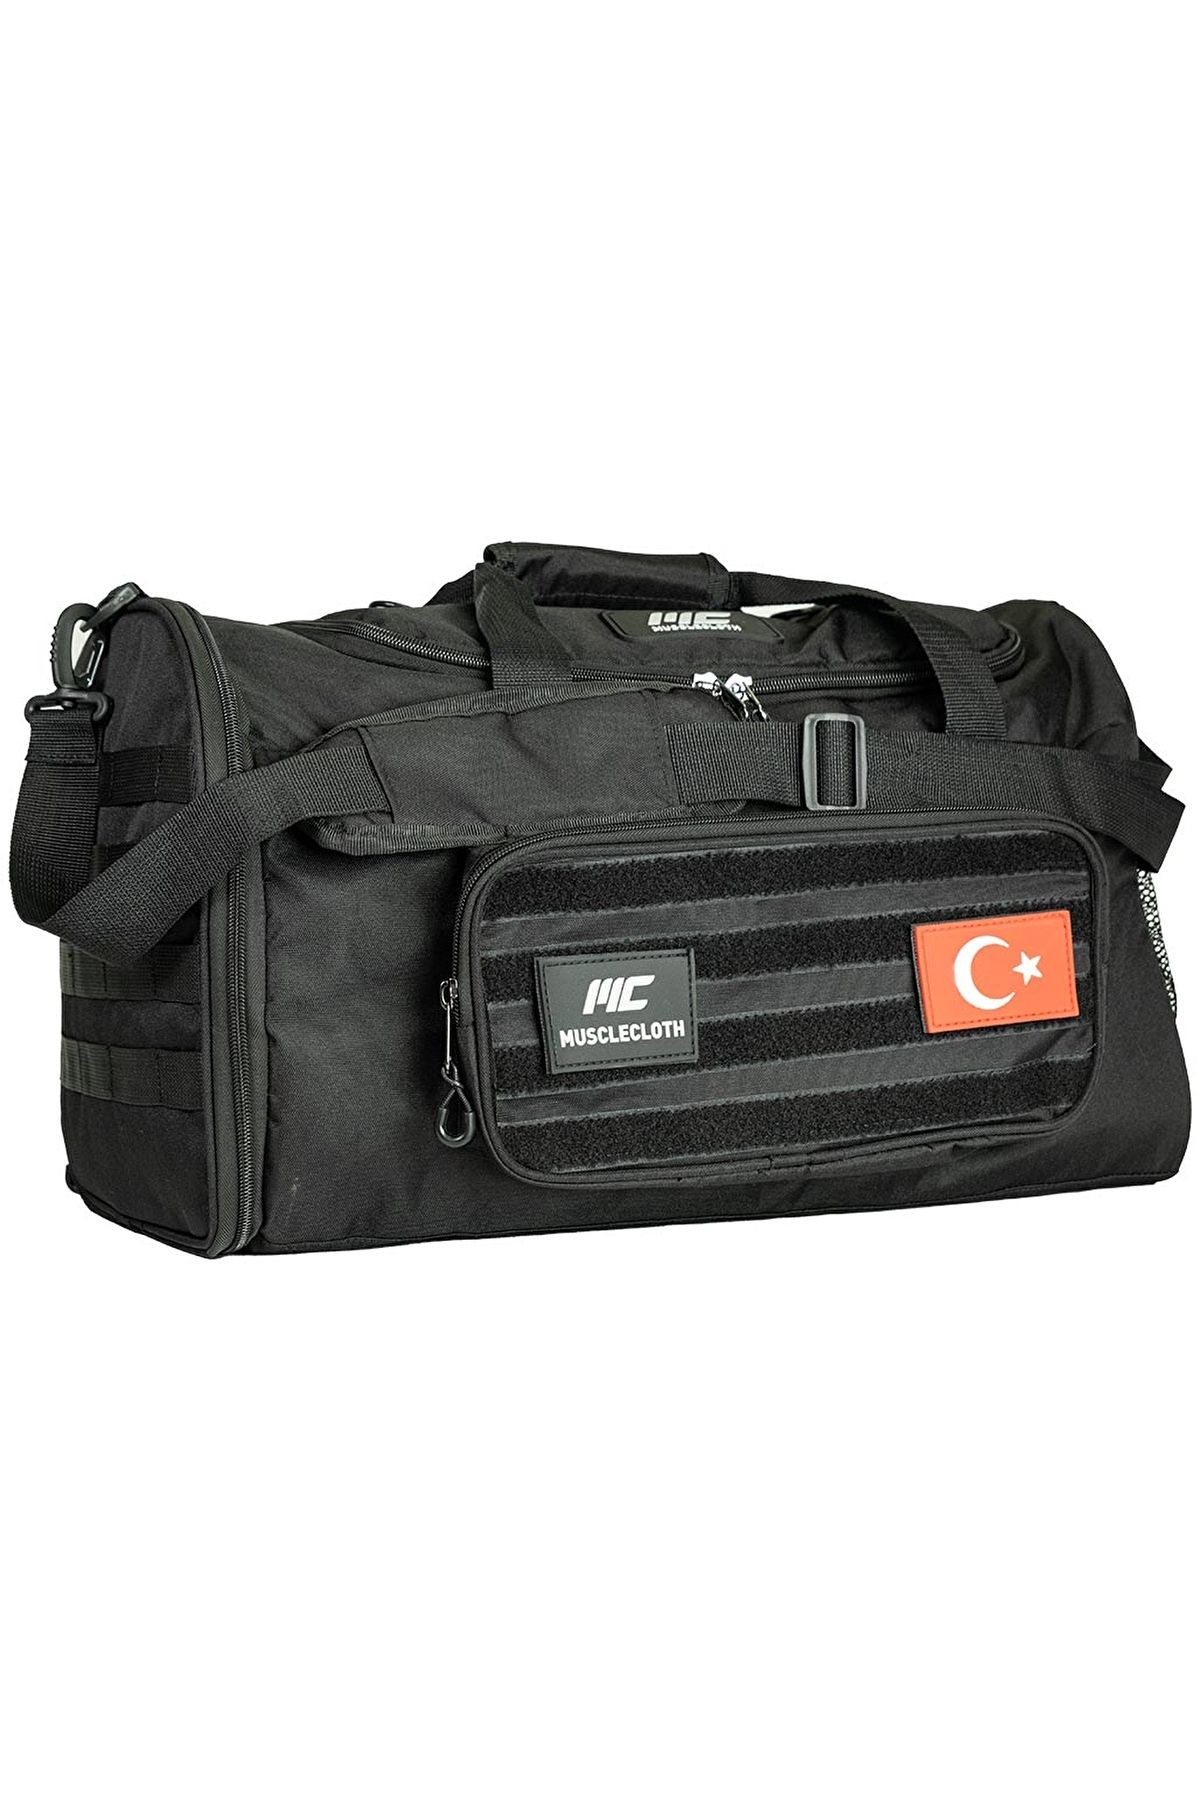 MUSCLECLOTH Tactical Duffel Bag Silindir Çanta Siyah